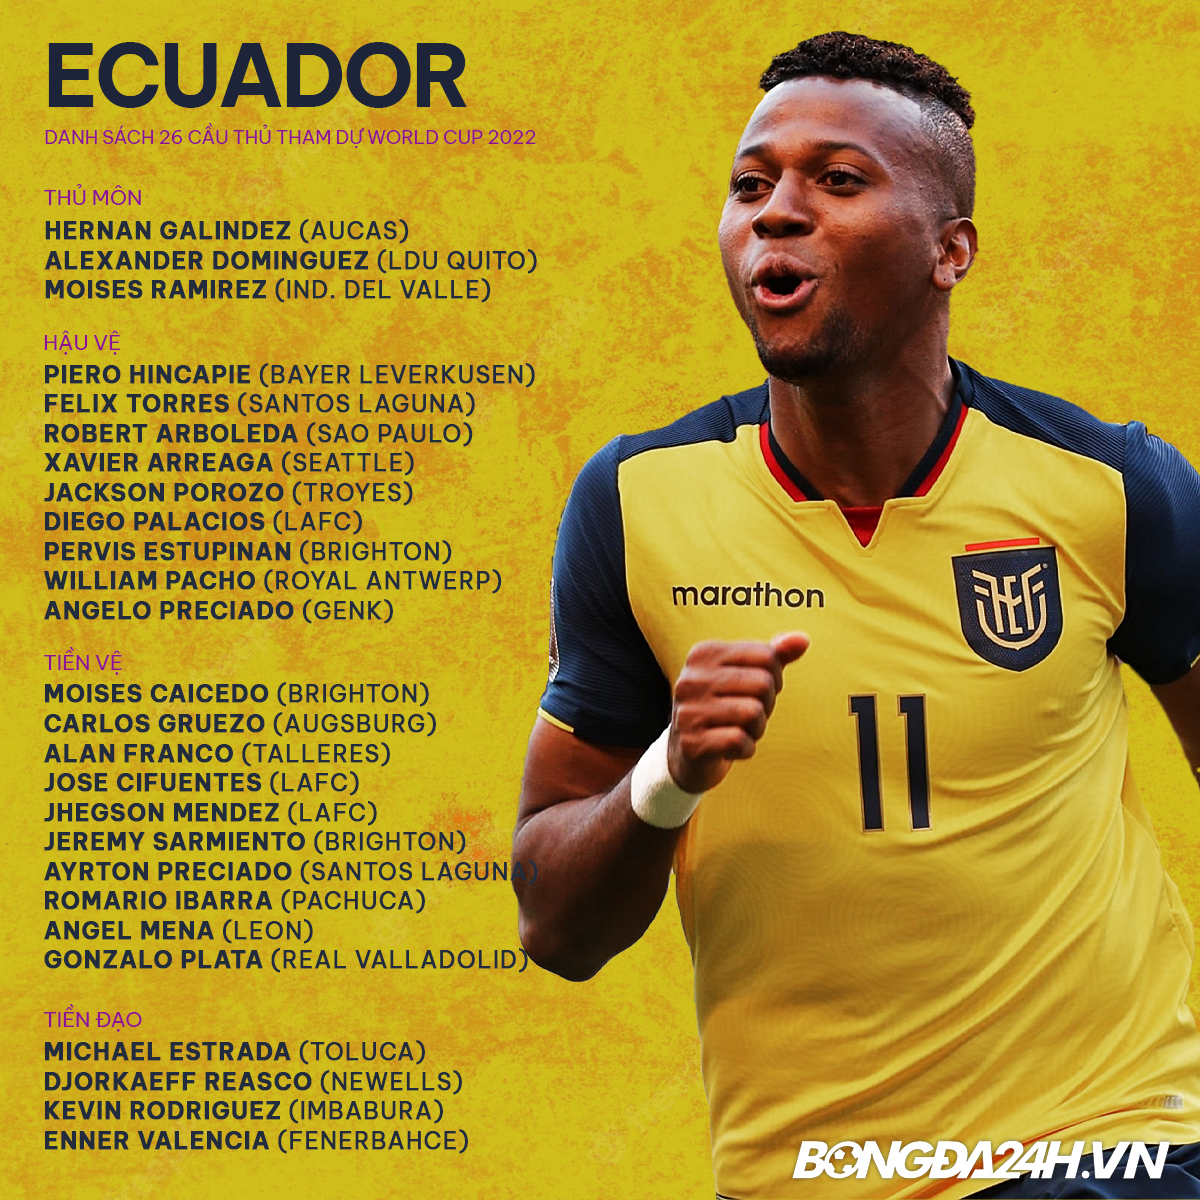 Danh sach dT Ecuador du World Cup 2022